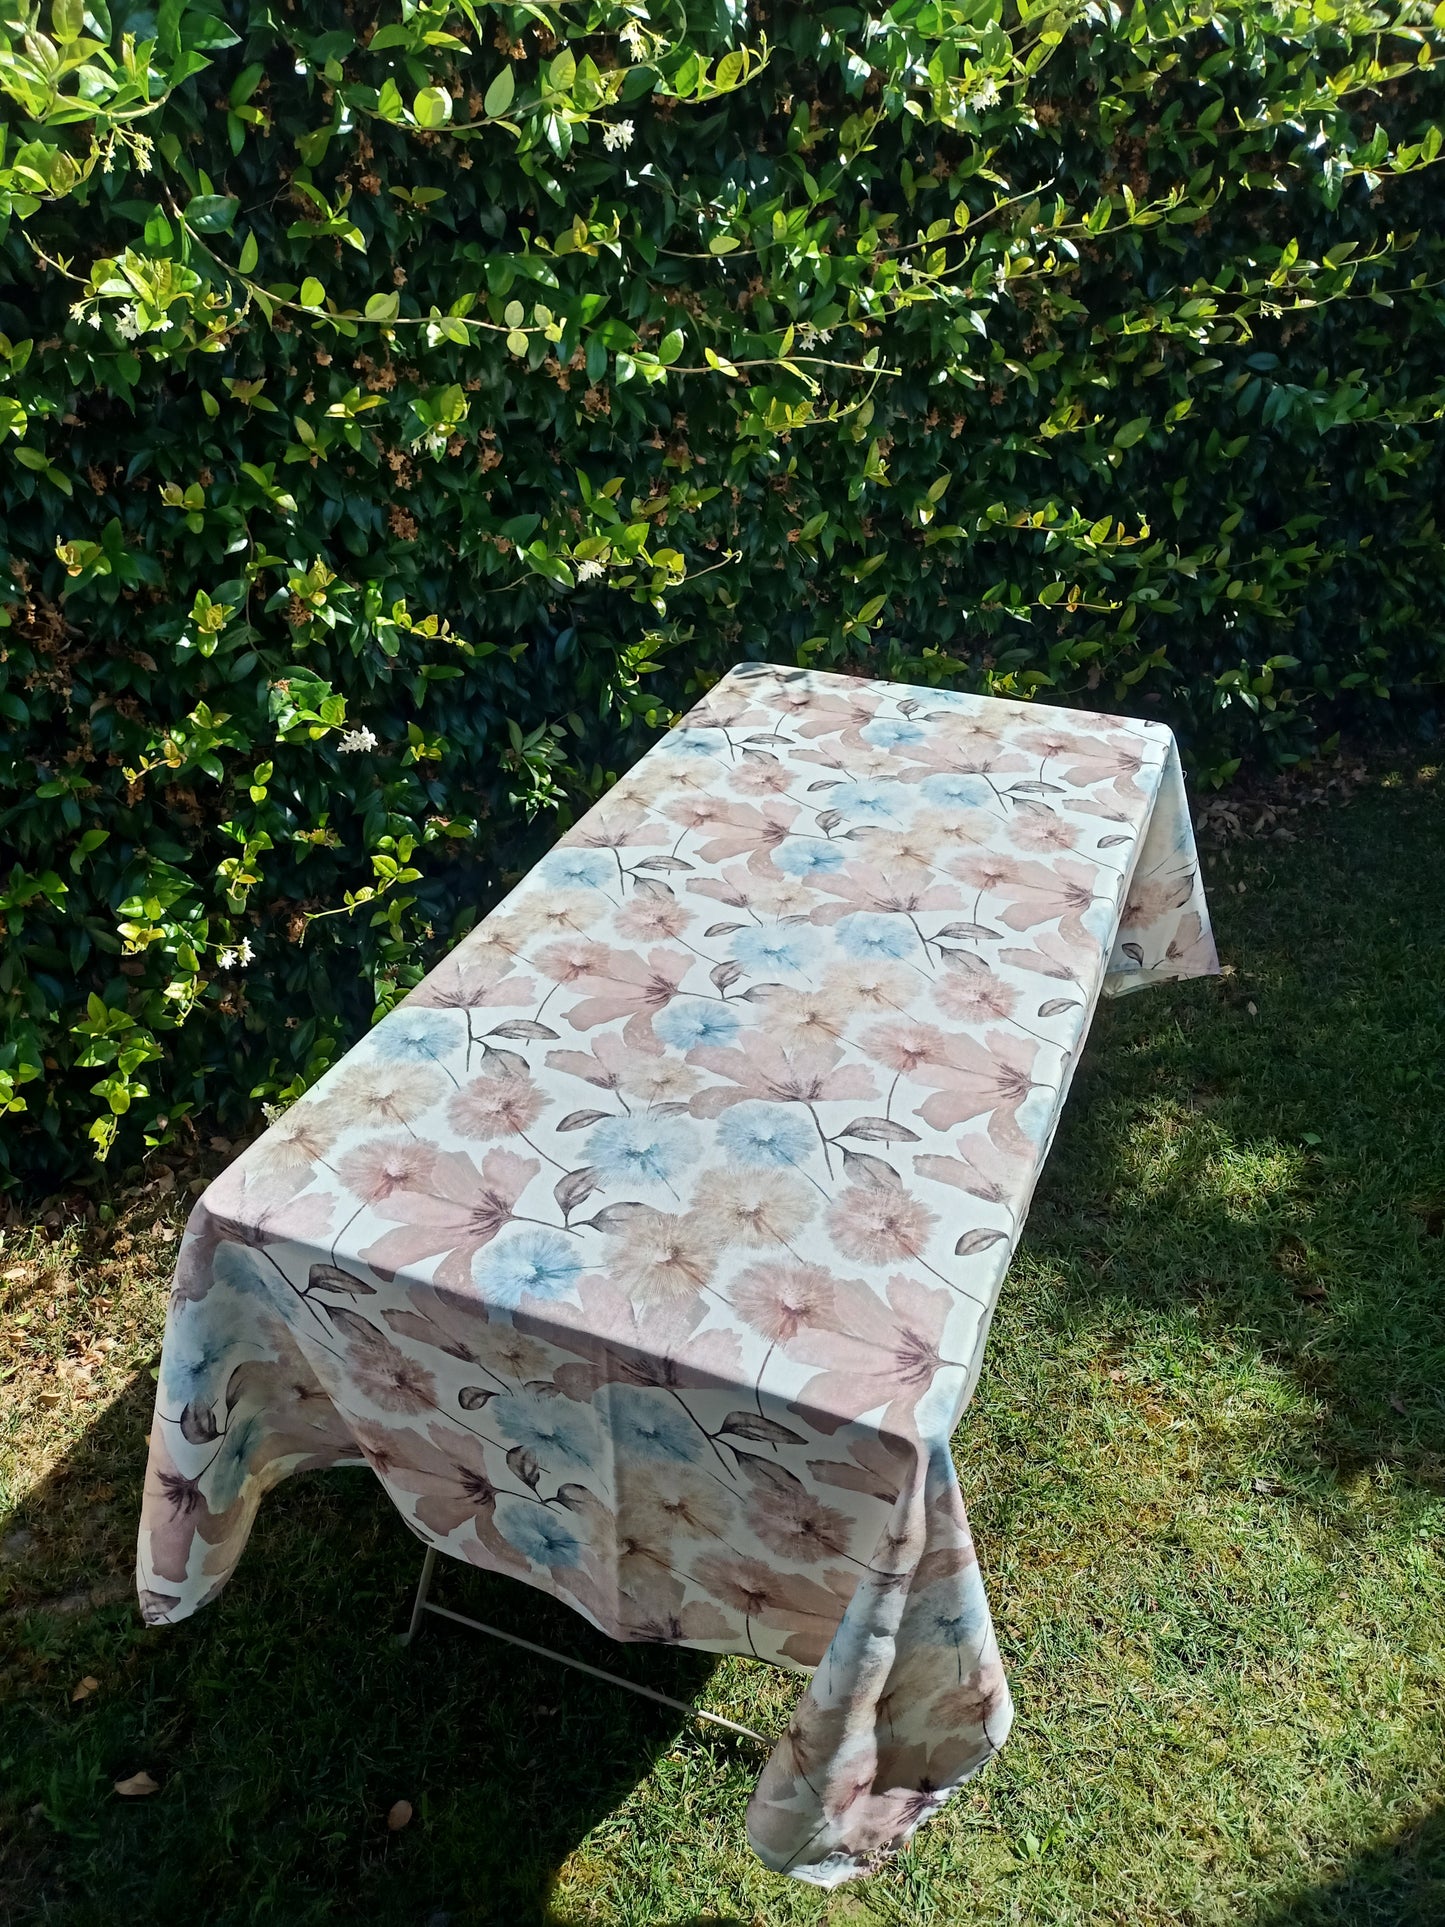 Desire tablecloth